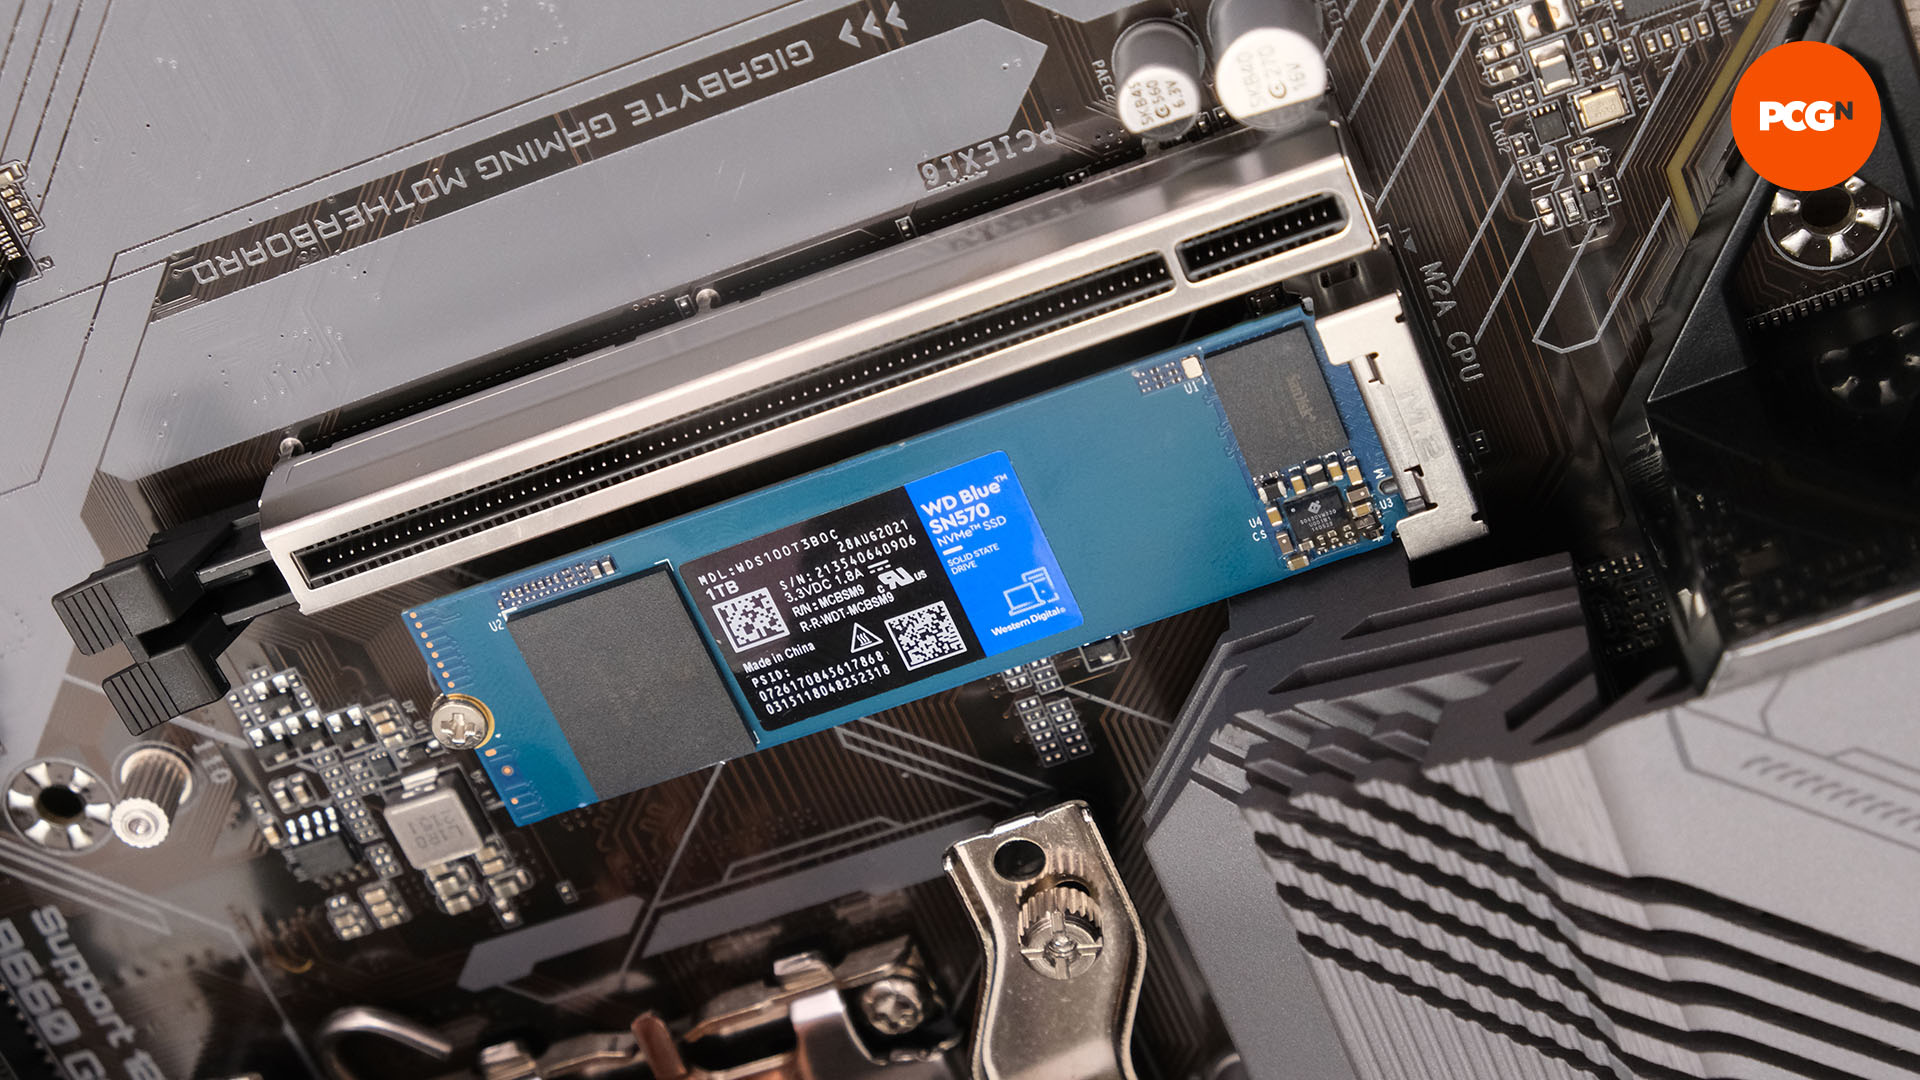 WD Blue SN570 SSD installed in Gigabyte motherboard